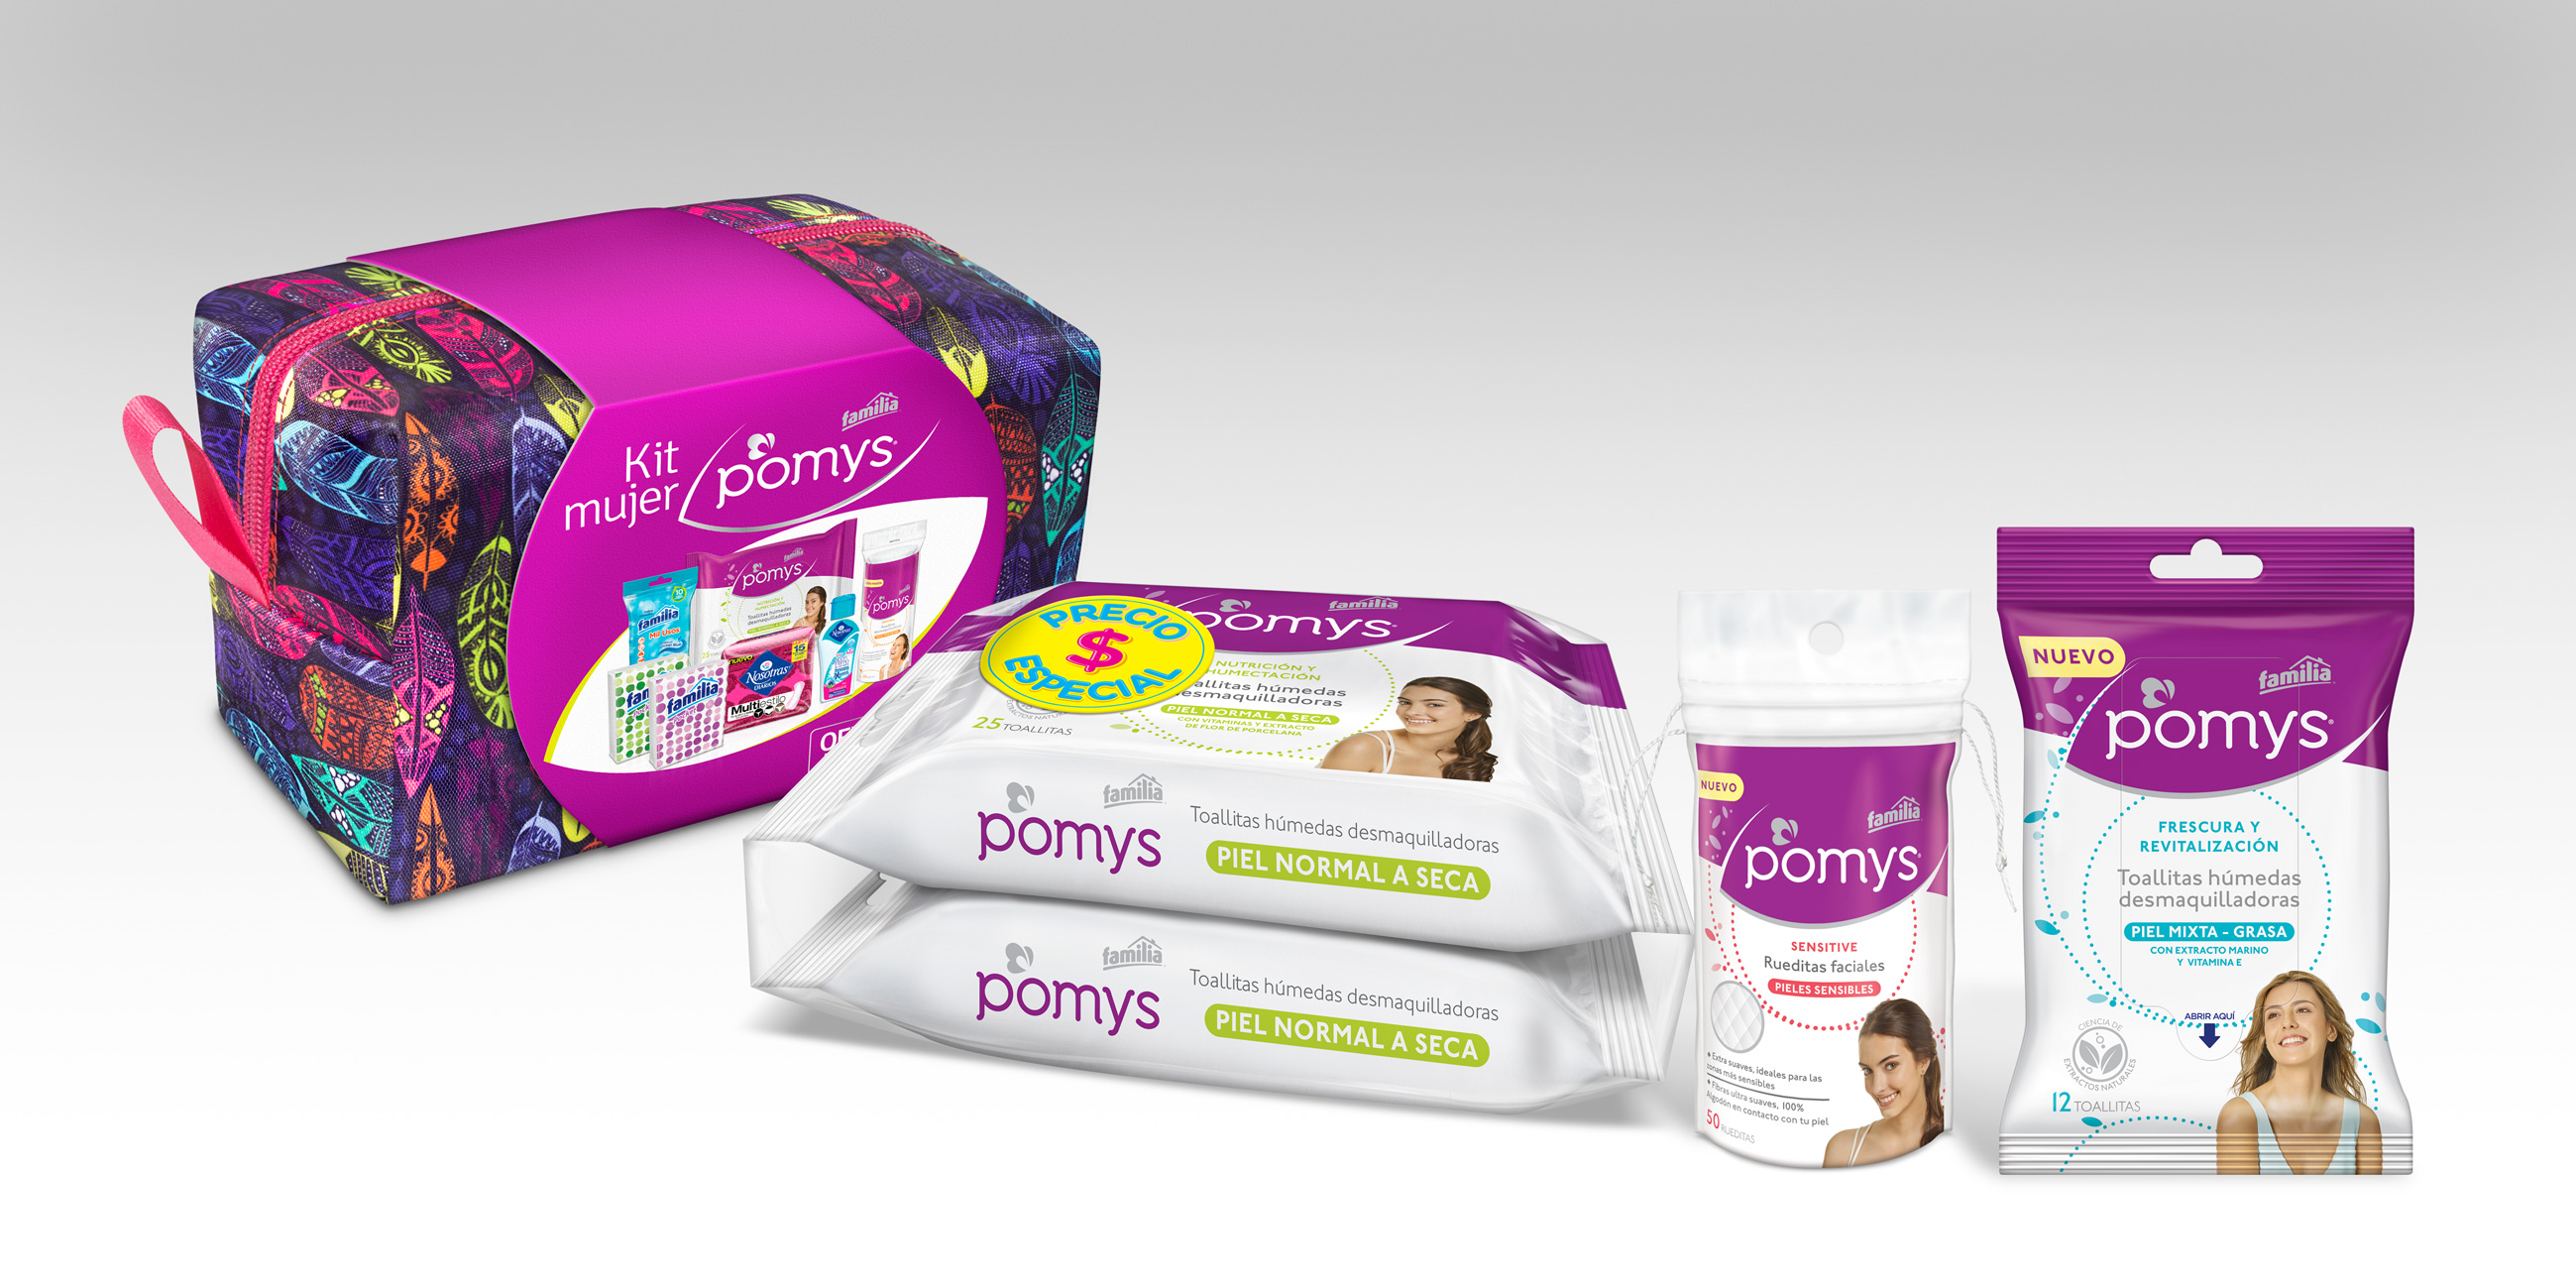 Modelado 2D de productos marca Pomys de Familia